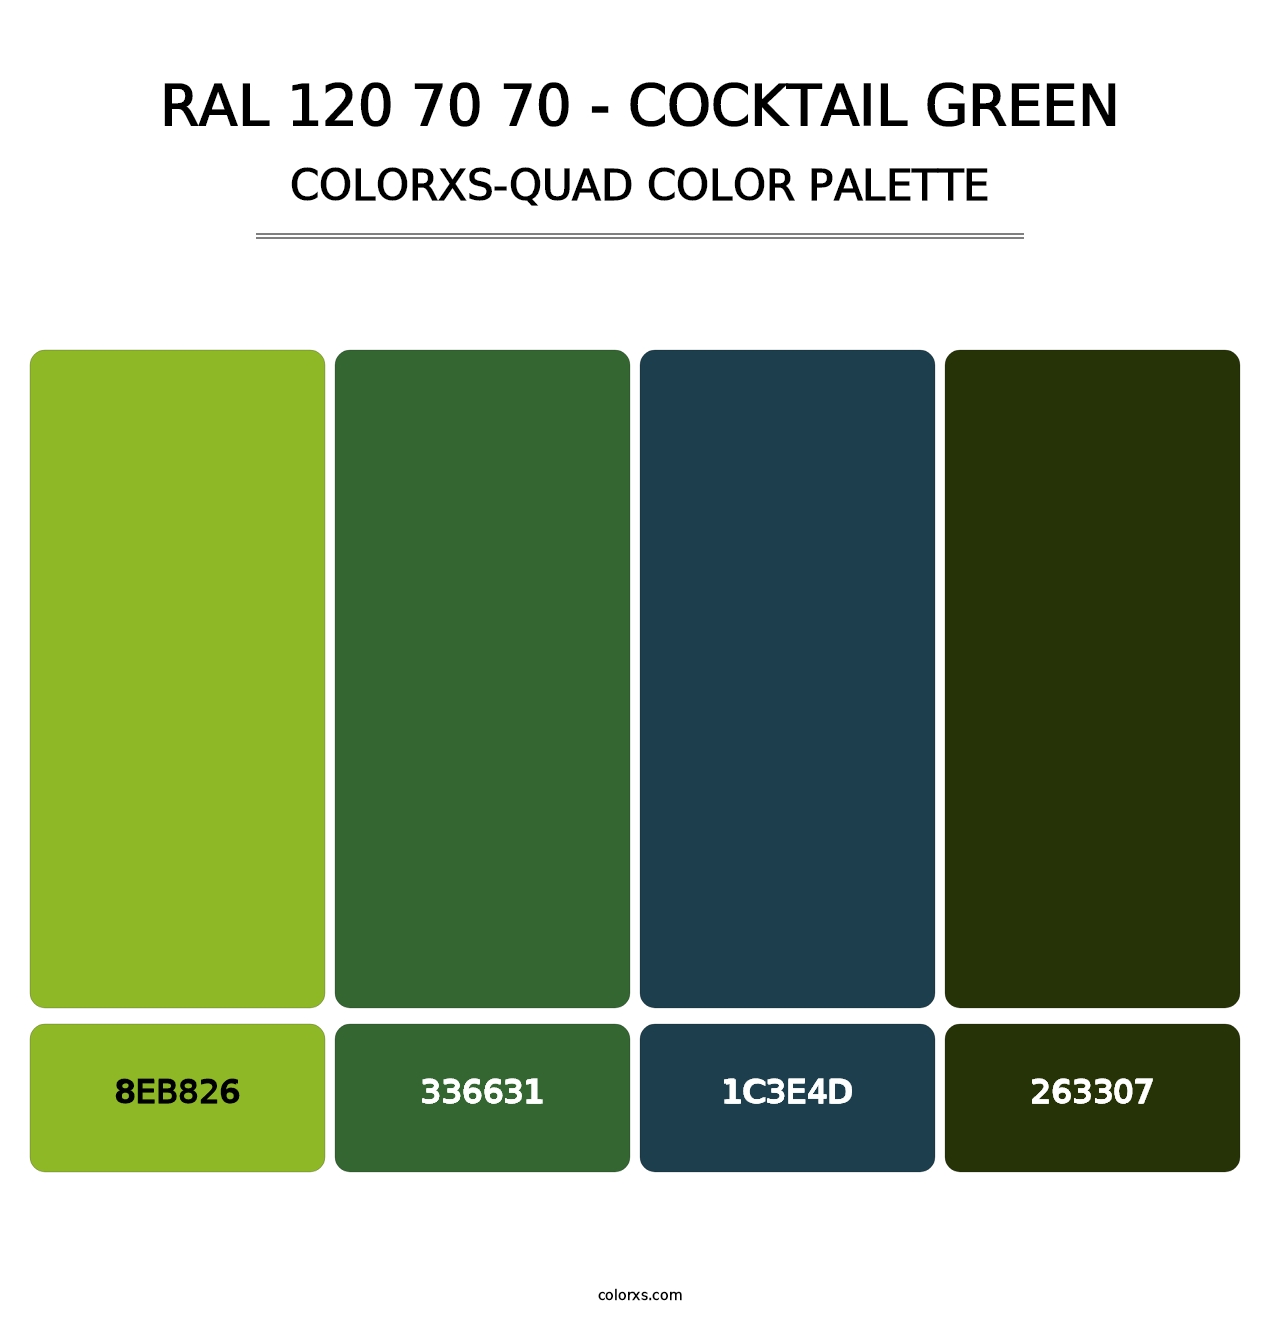 RAL 120 70 70 - Cocktail Green - Colorxs Quad Palette